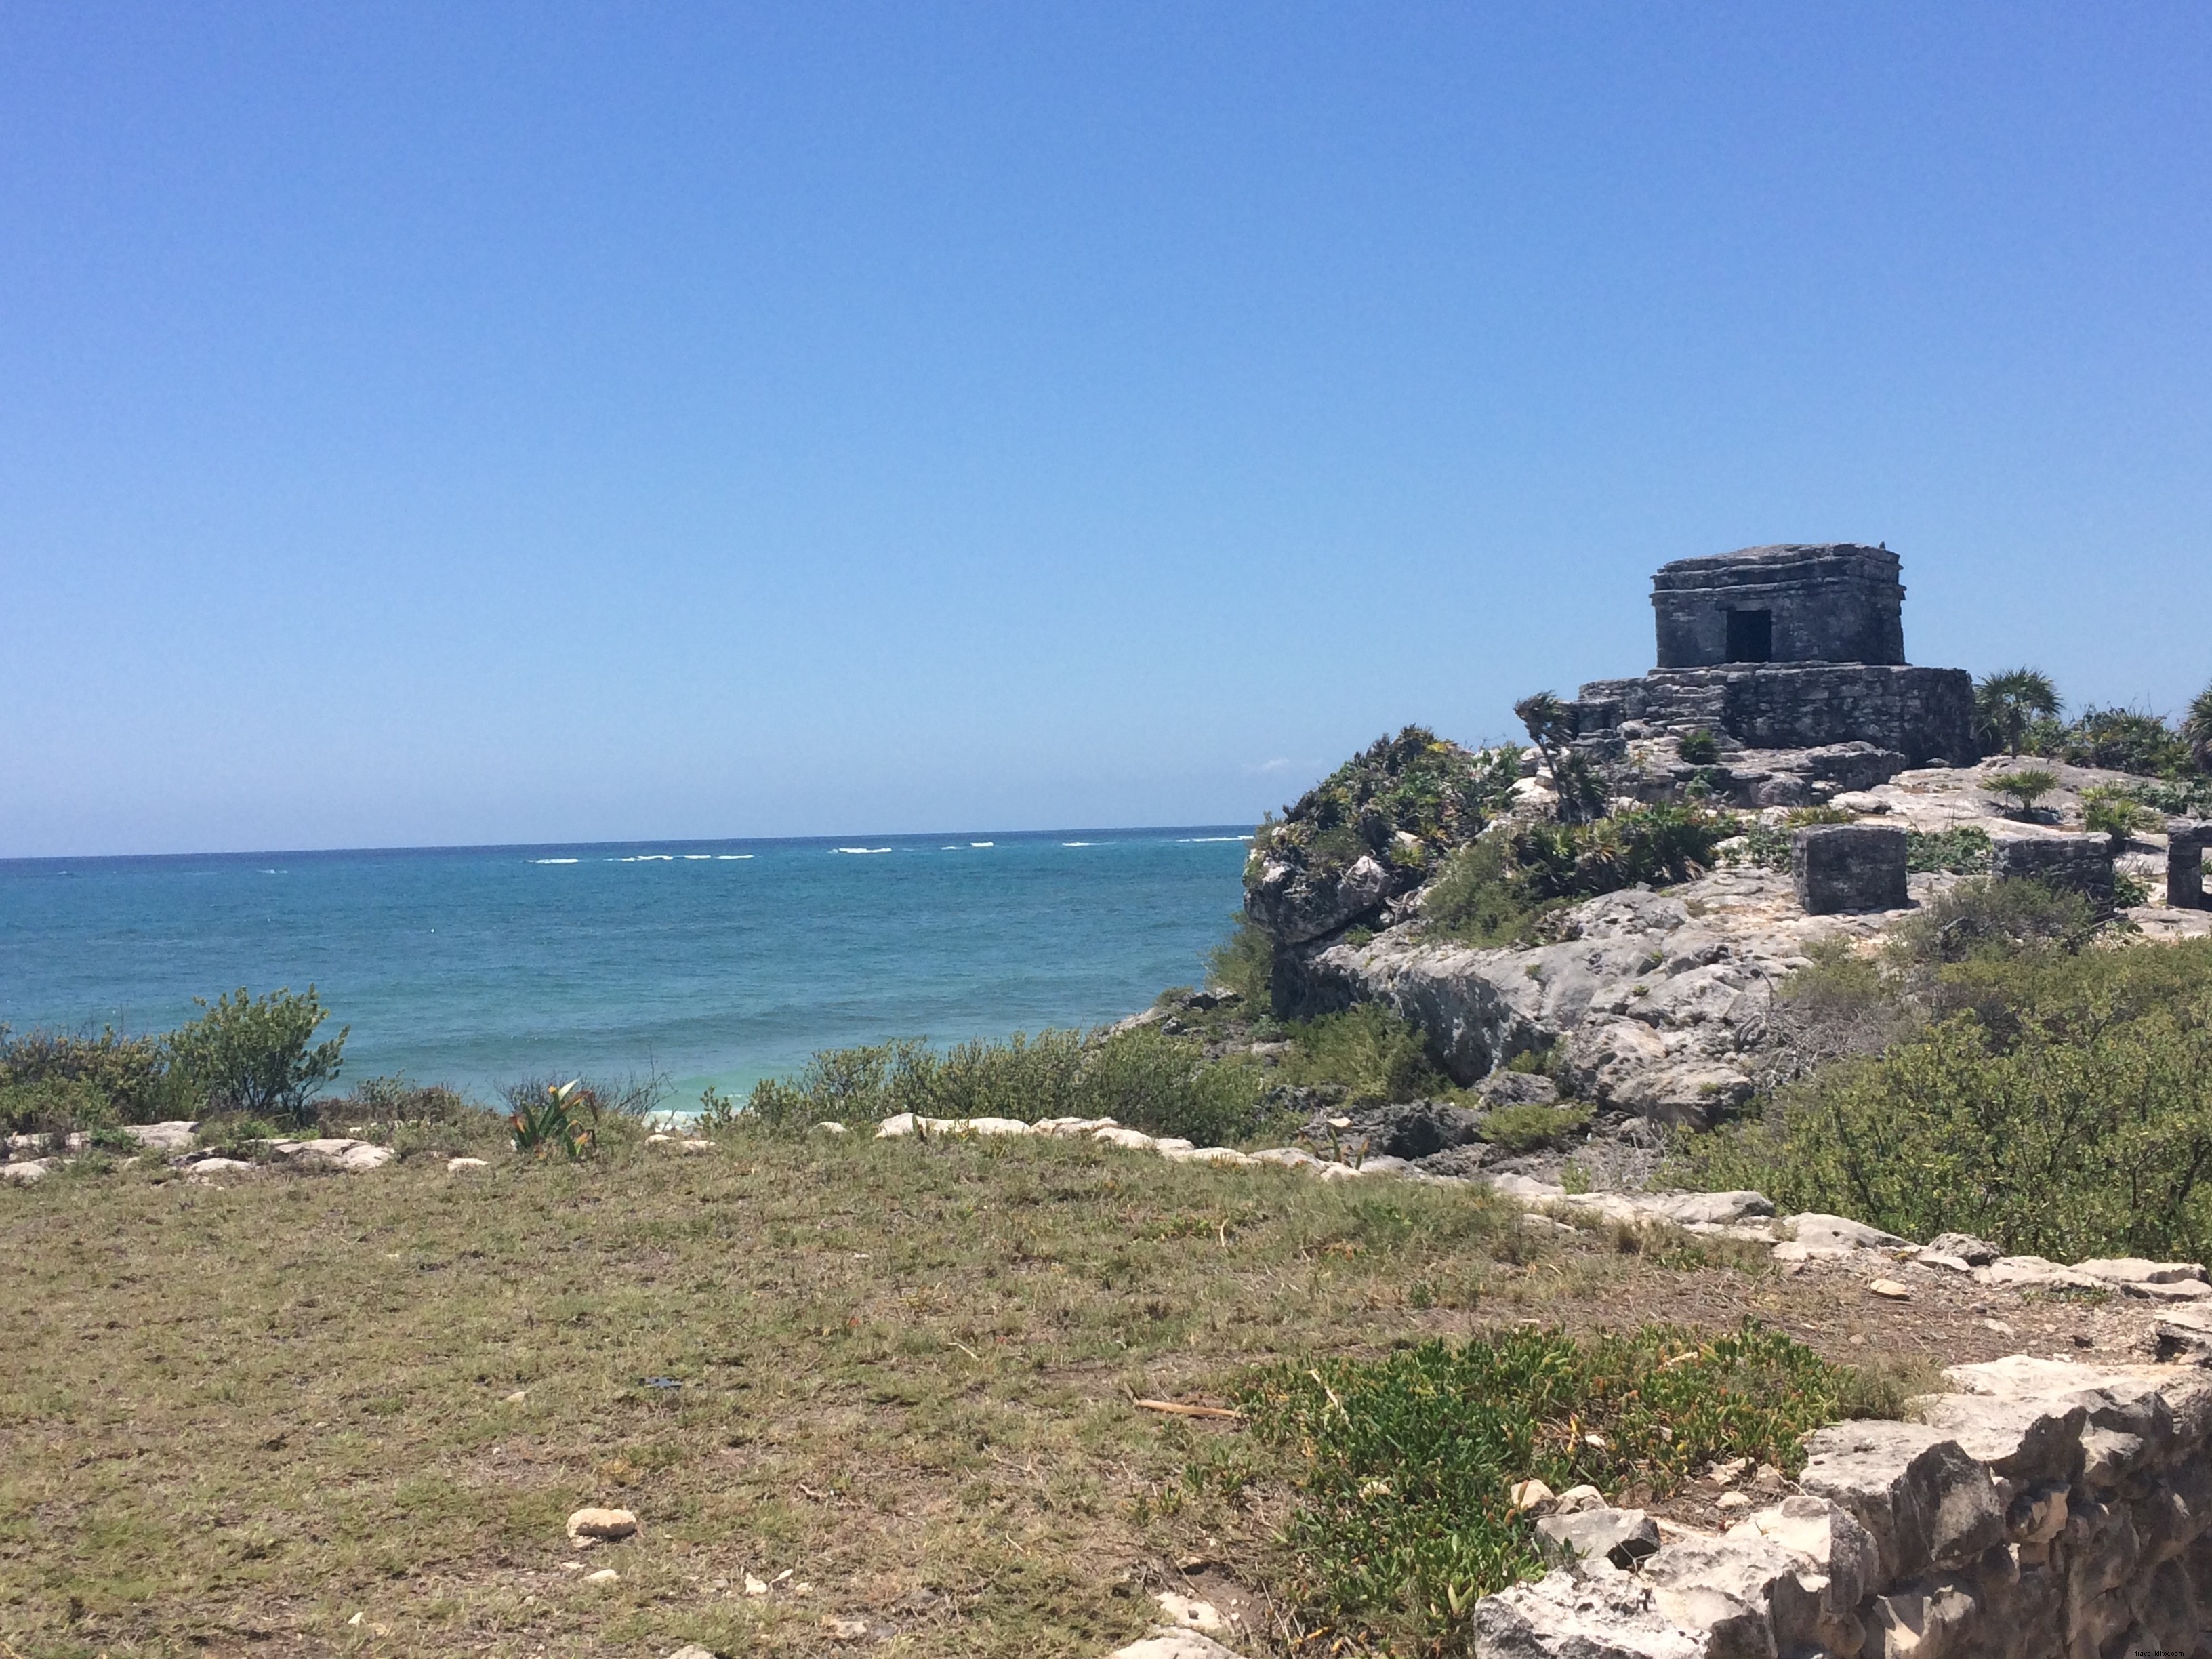 Facile, Breezy Day Trips da Cancun 